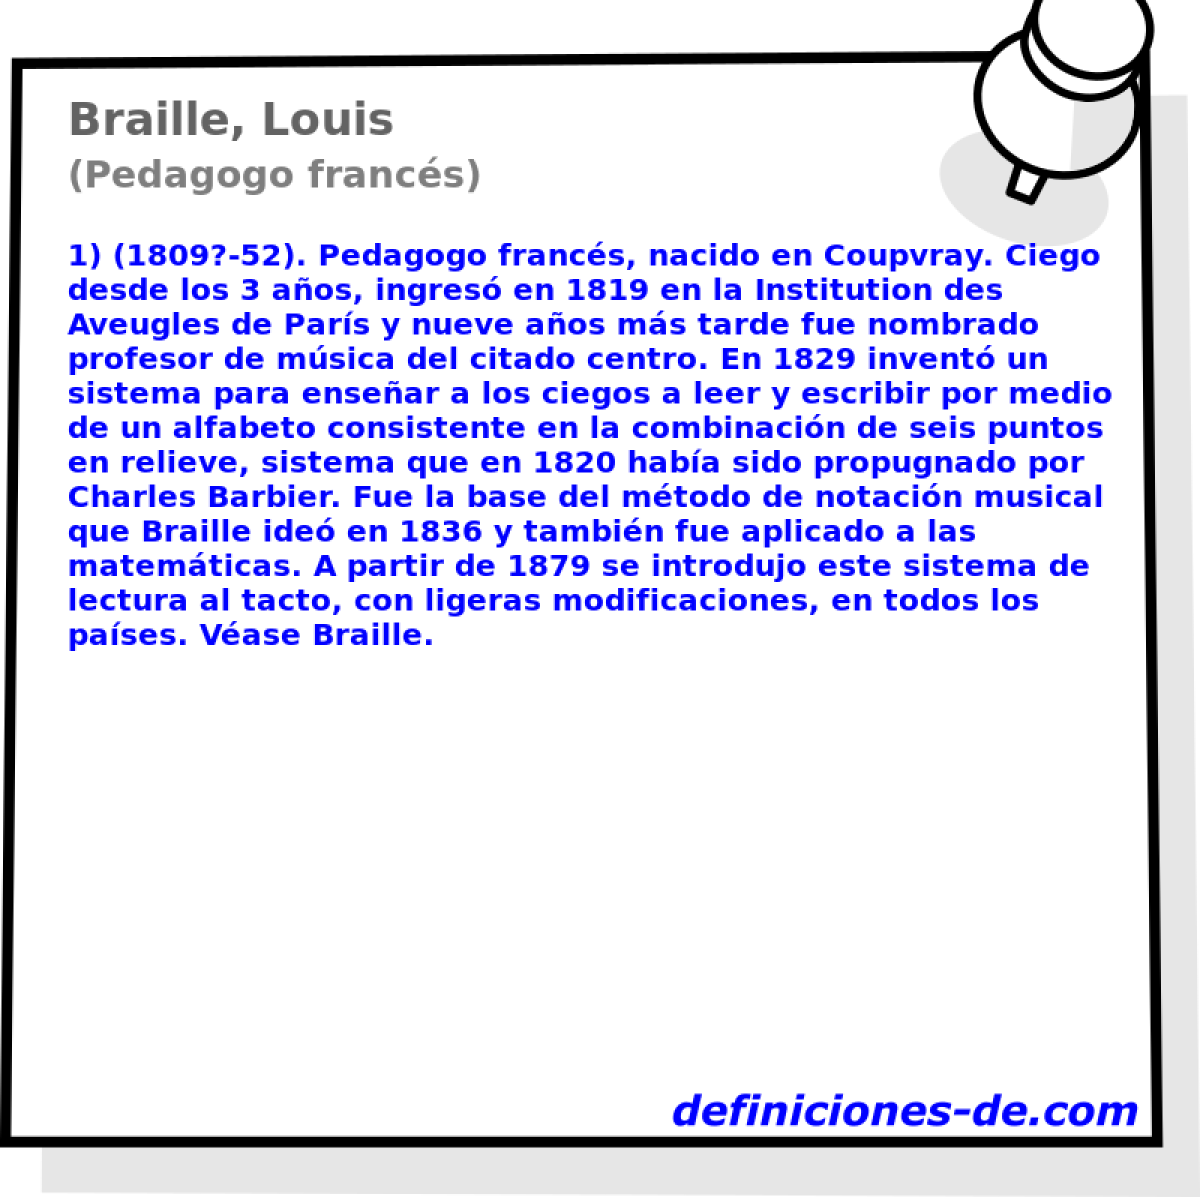 Braille, Louis (Pedagogo francs)